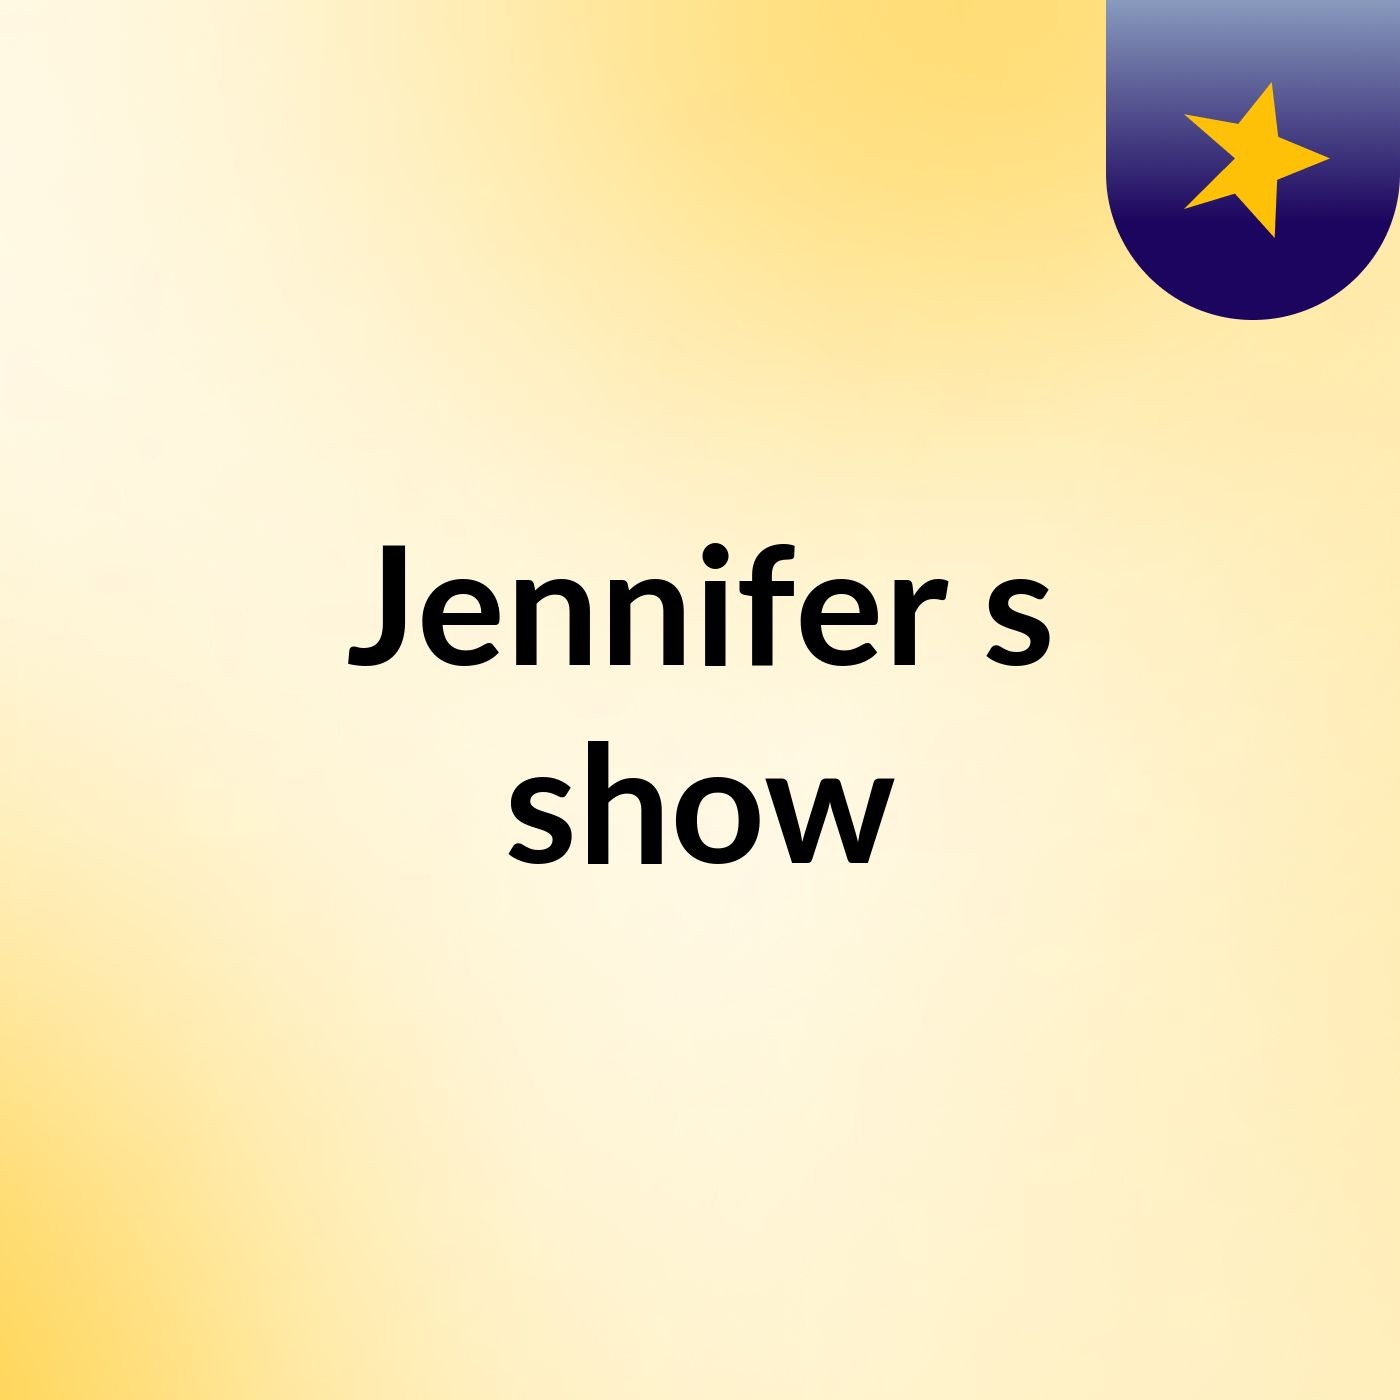 Jennifer's show